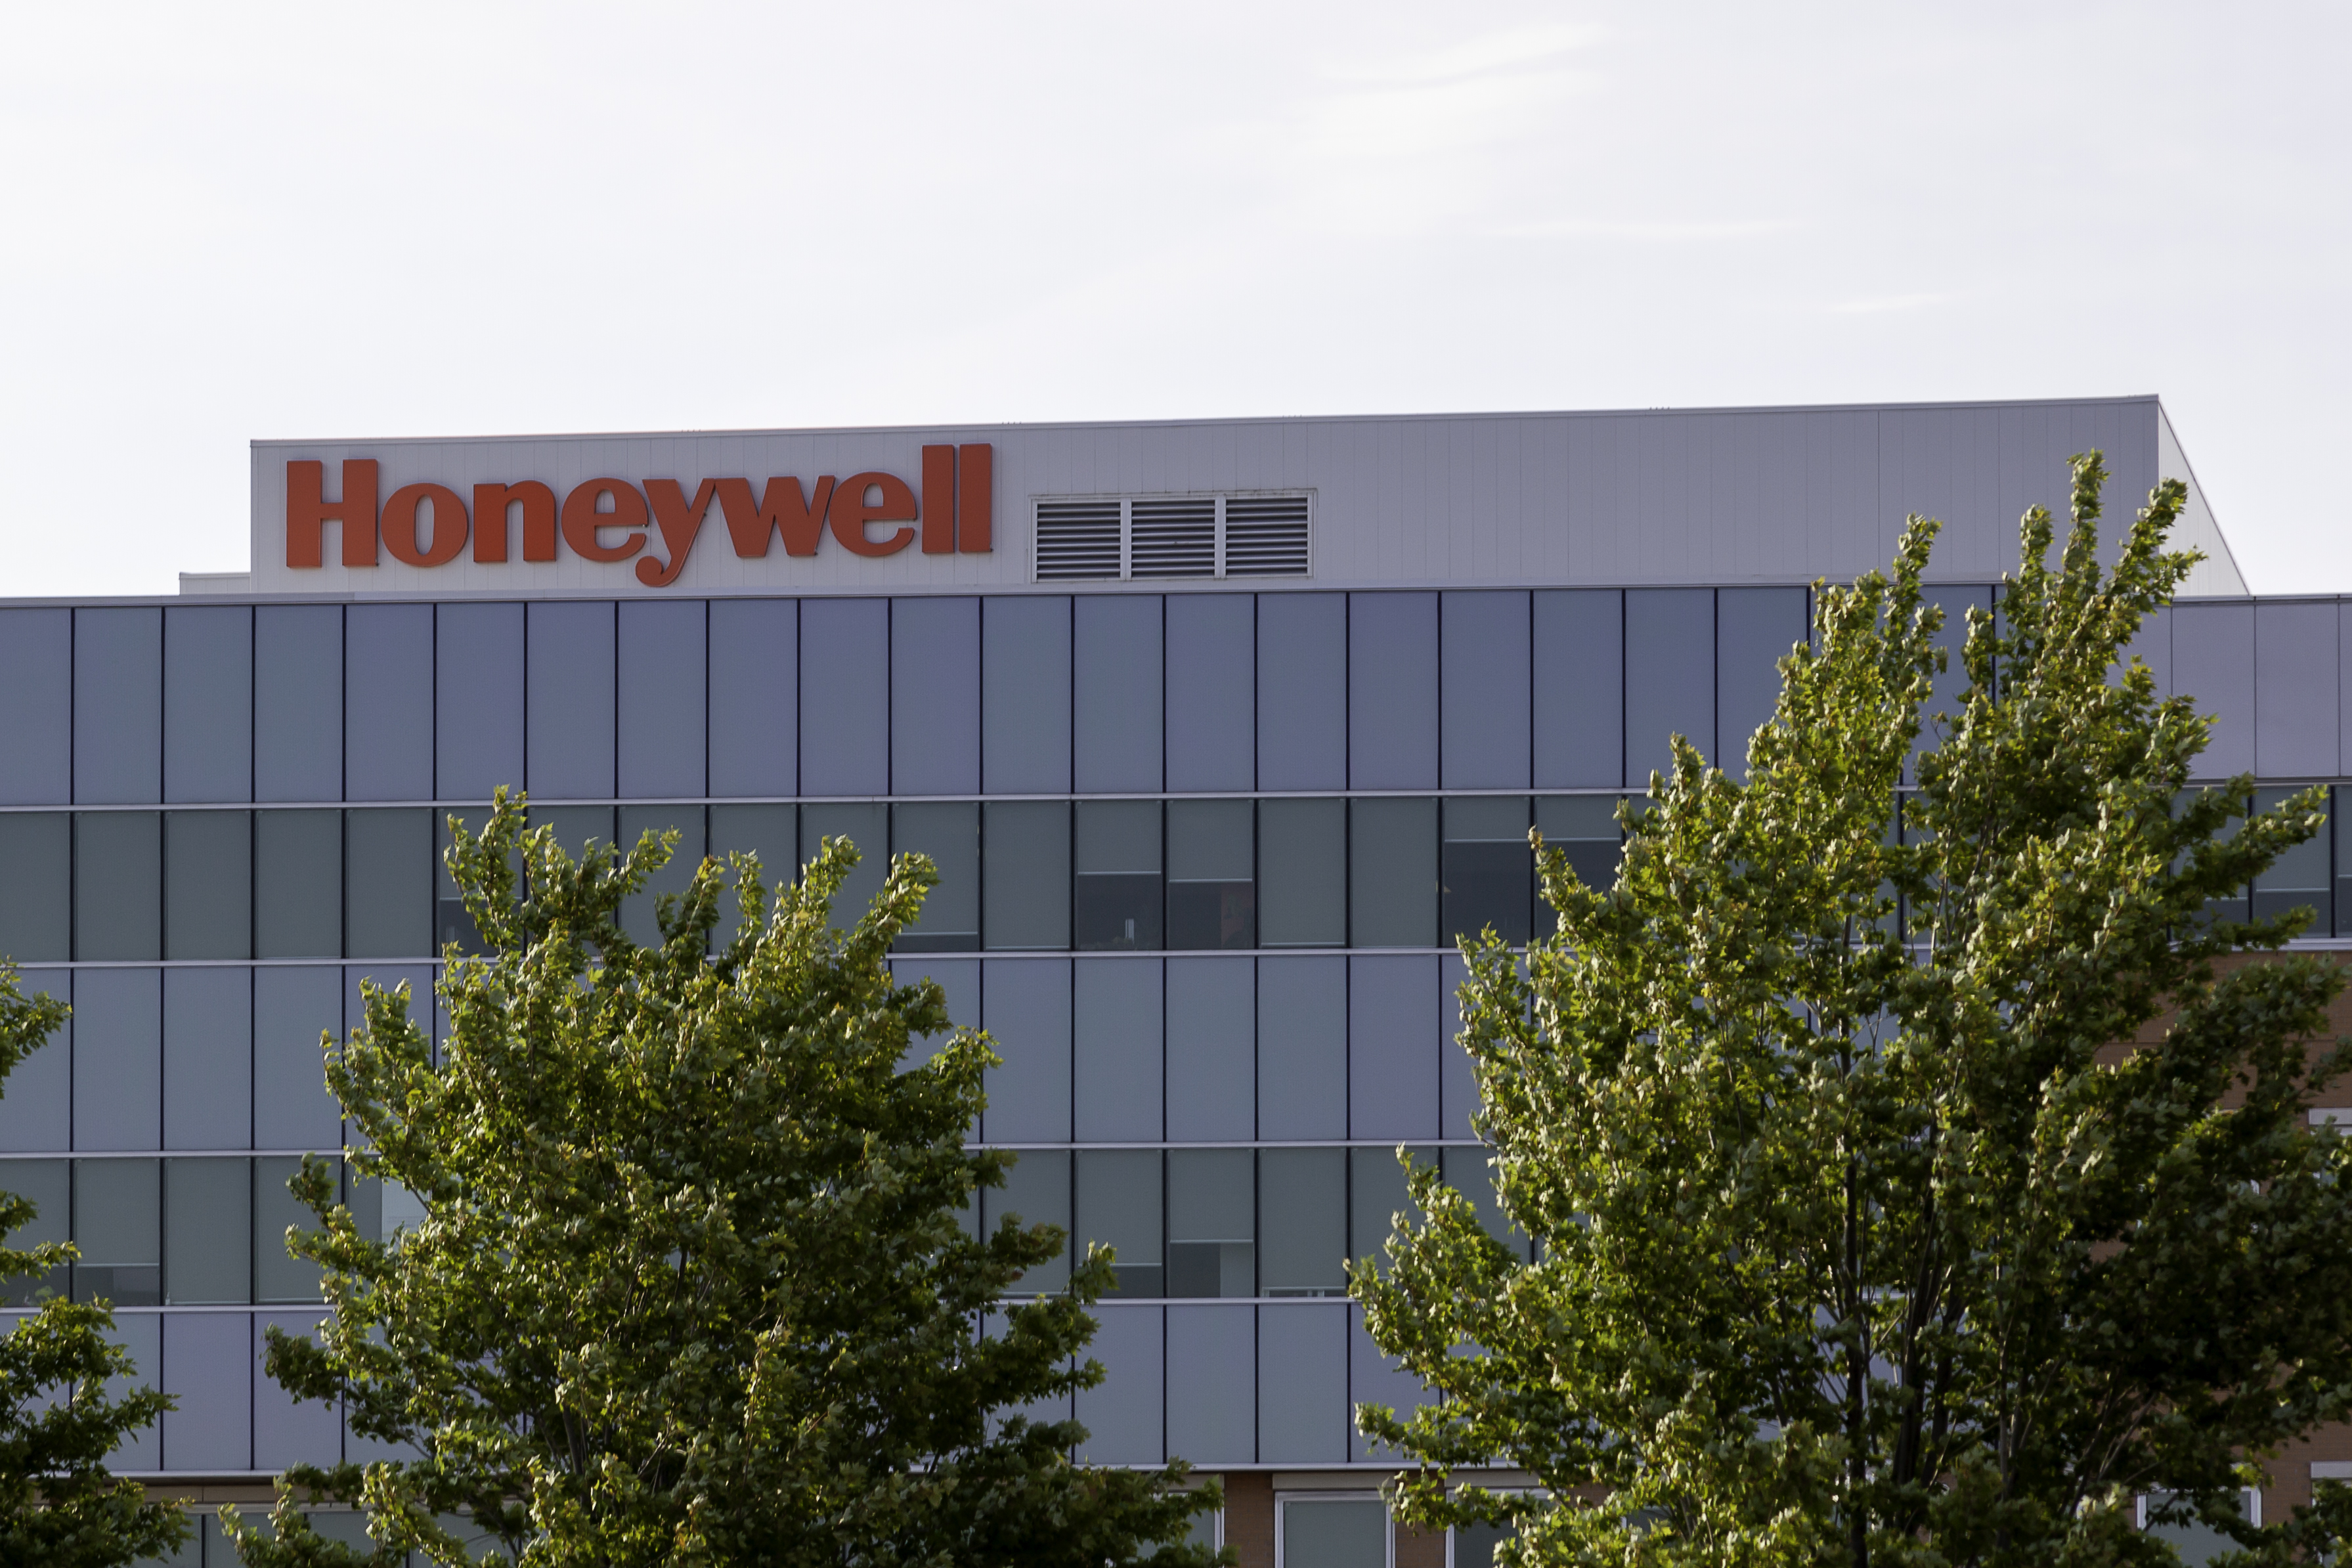 seekingalpha.com - Joshua Fineman - Honeywell stock gains on report it's weighing Quantinuum IPO at $10B valuation